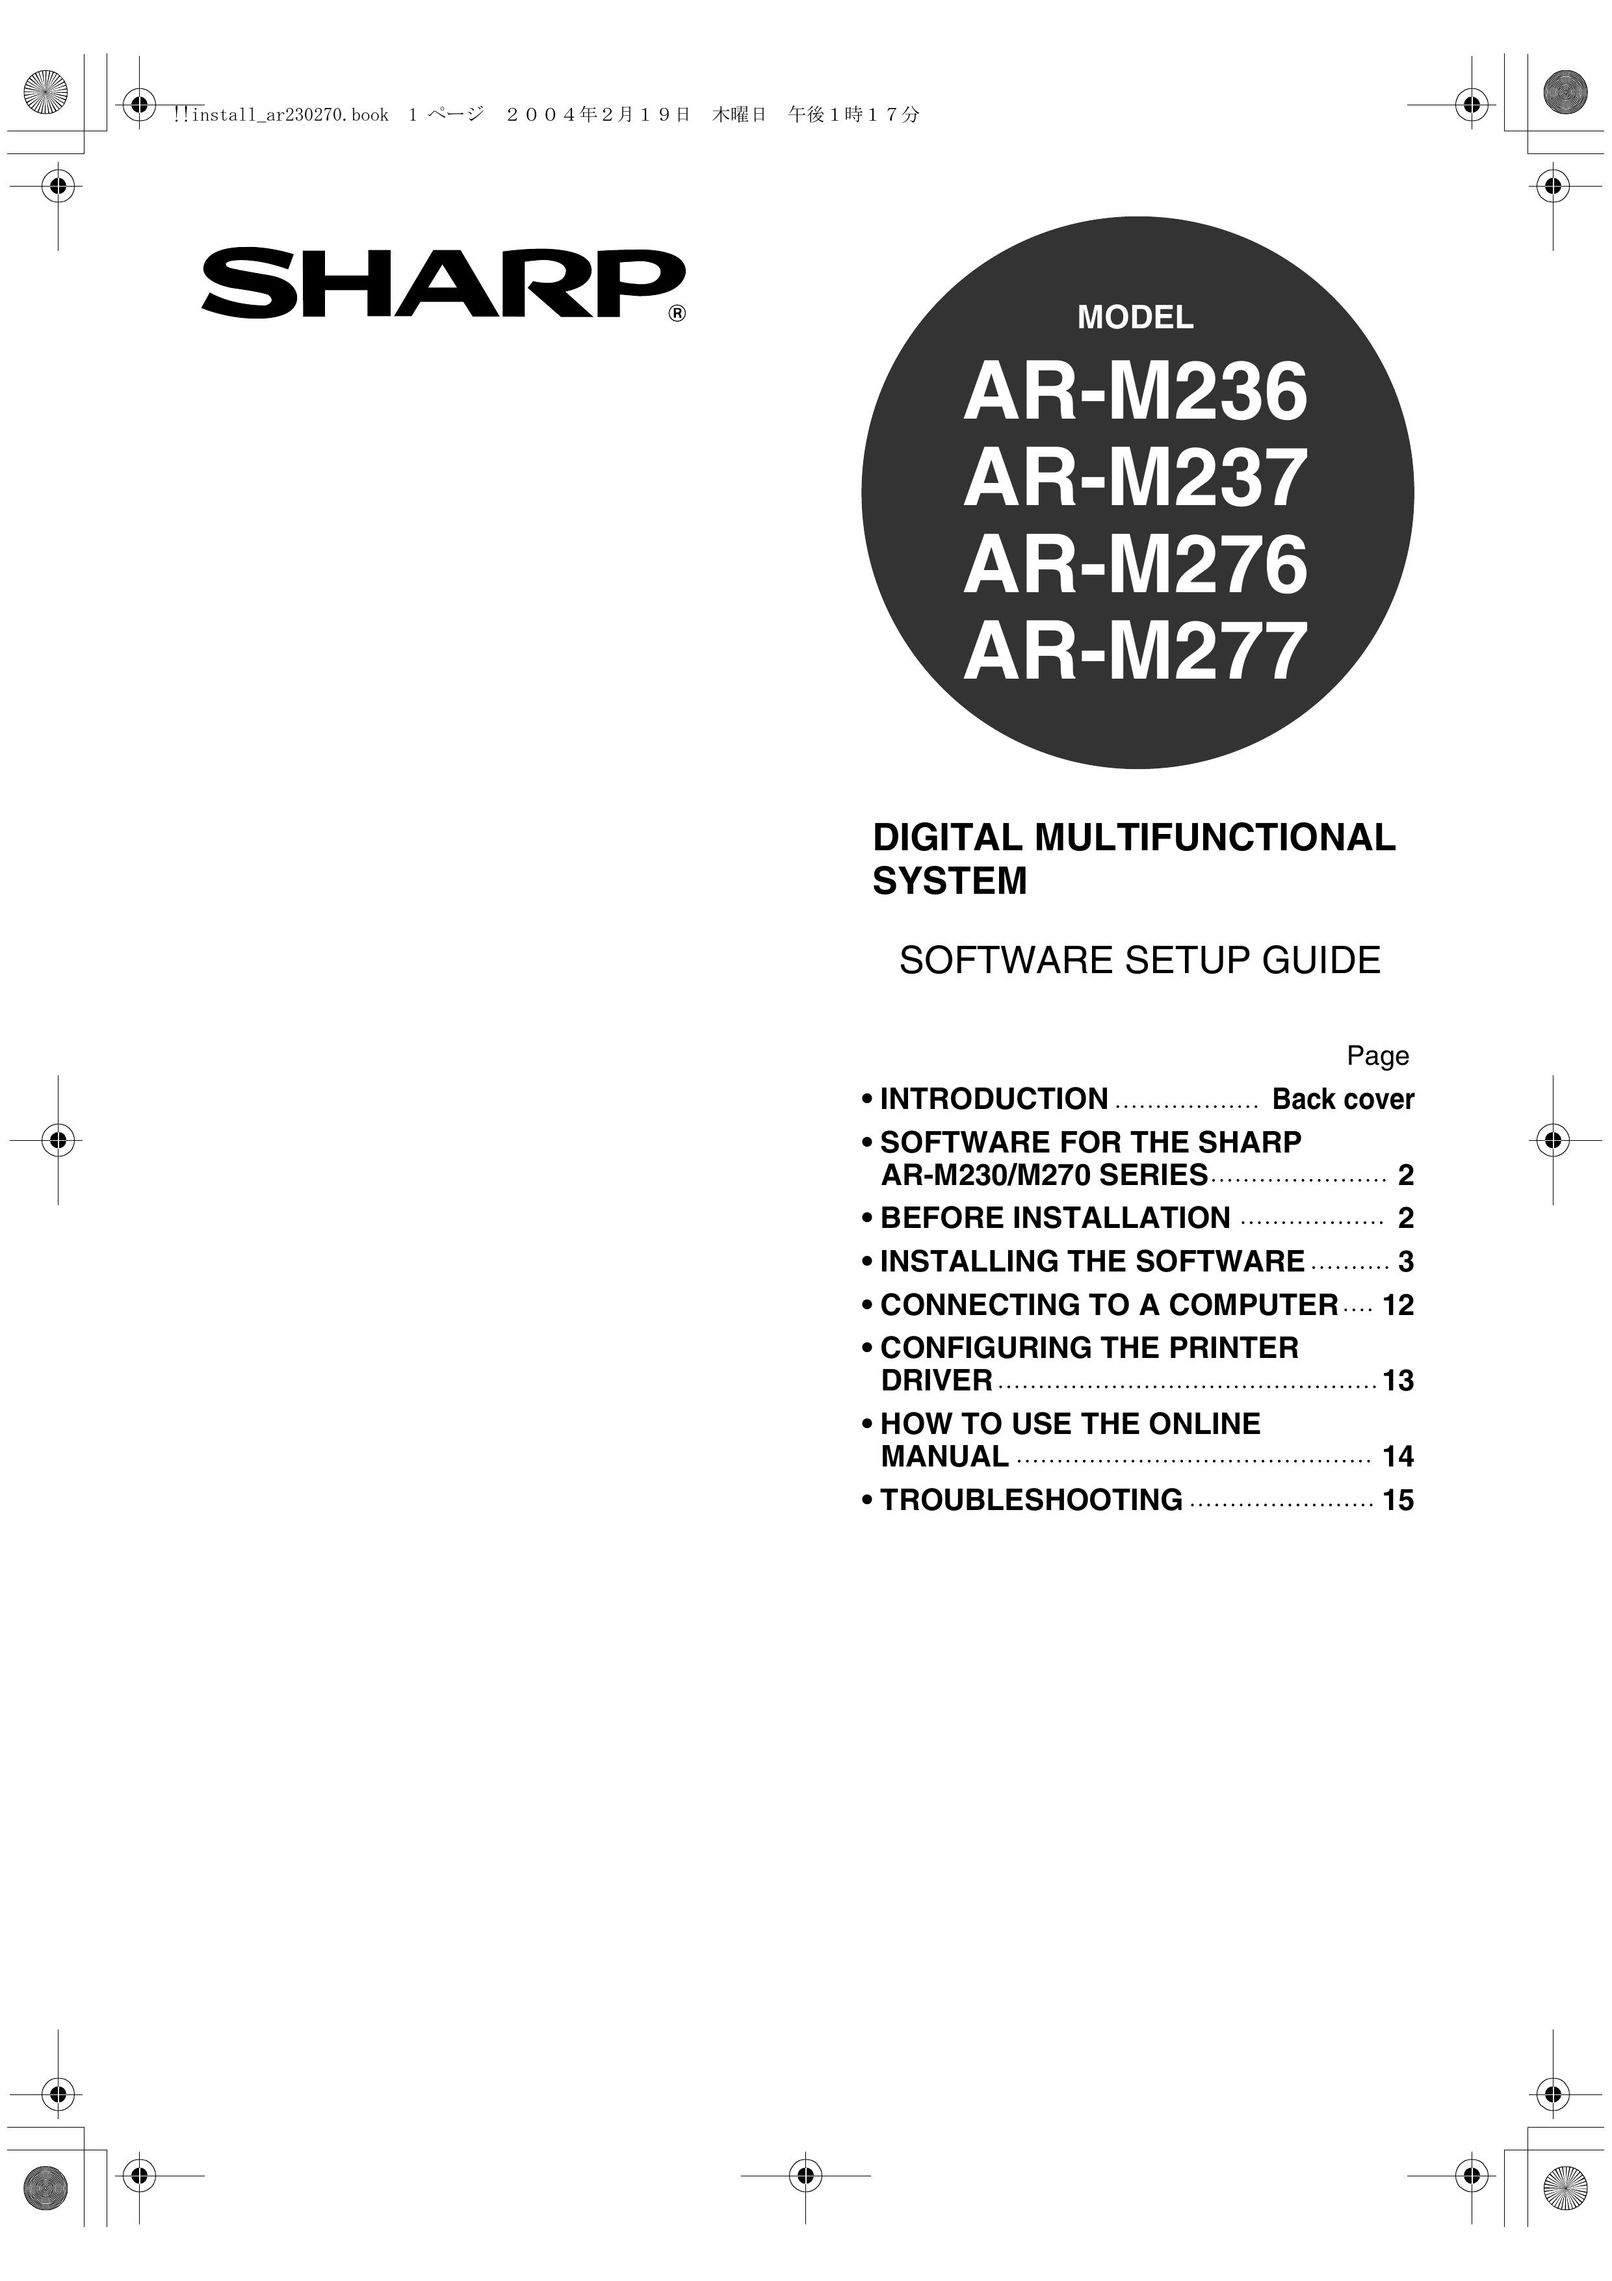 Sharp AR-M237 Fax Machine User Manual